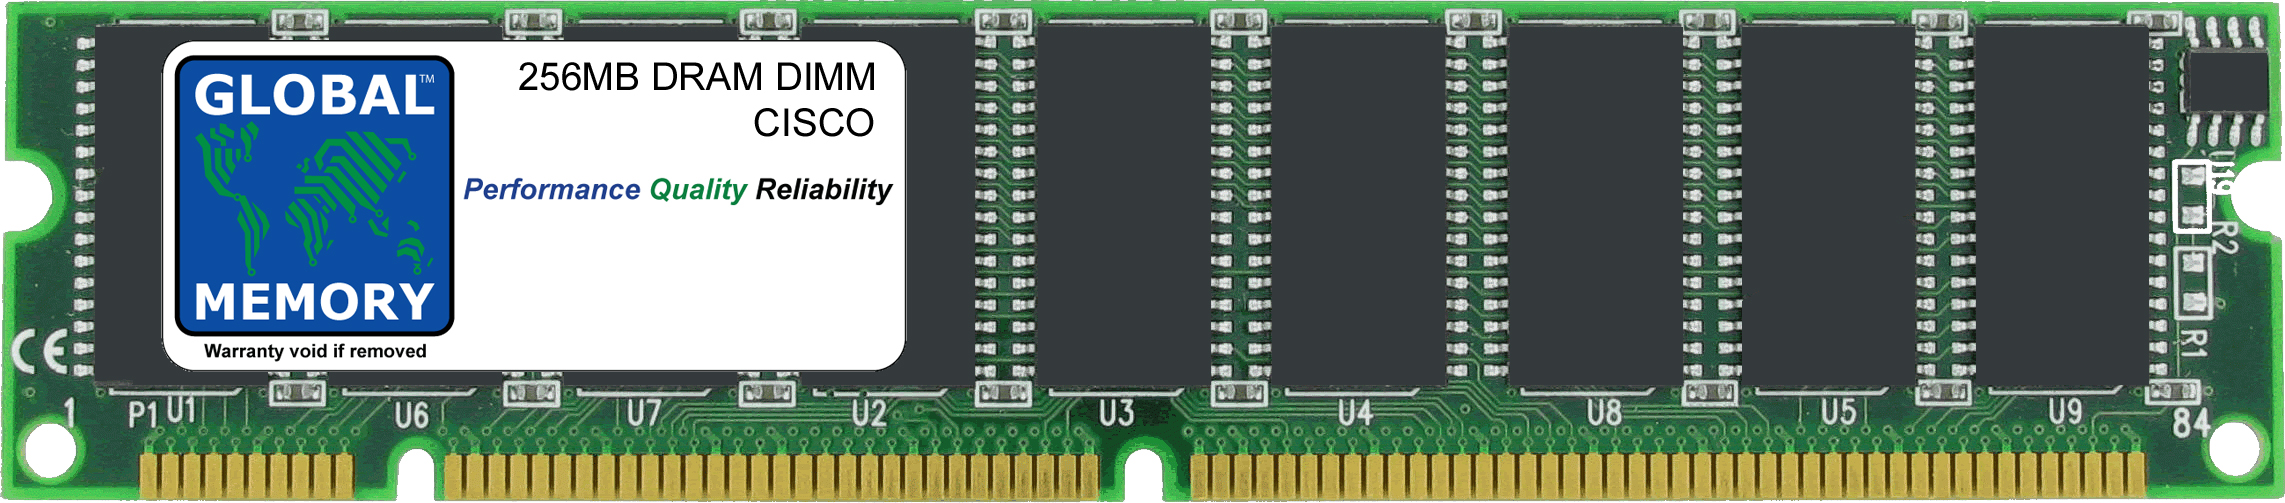 256MB DRAM DIMM MEMORY RAM FOR CISCO AS5350 UNIVERSAL GATEWAY (MEM-256M-AS535) - Click Image to Close